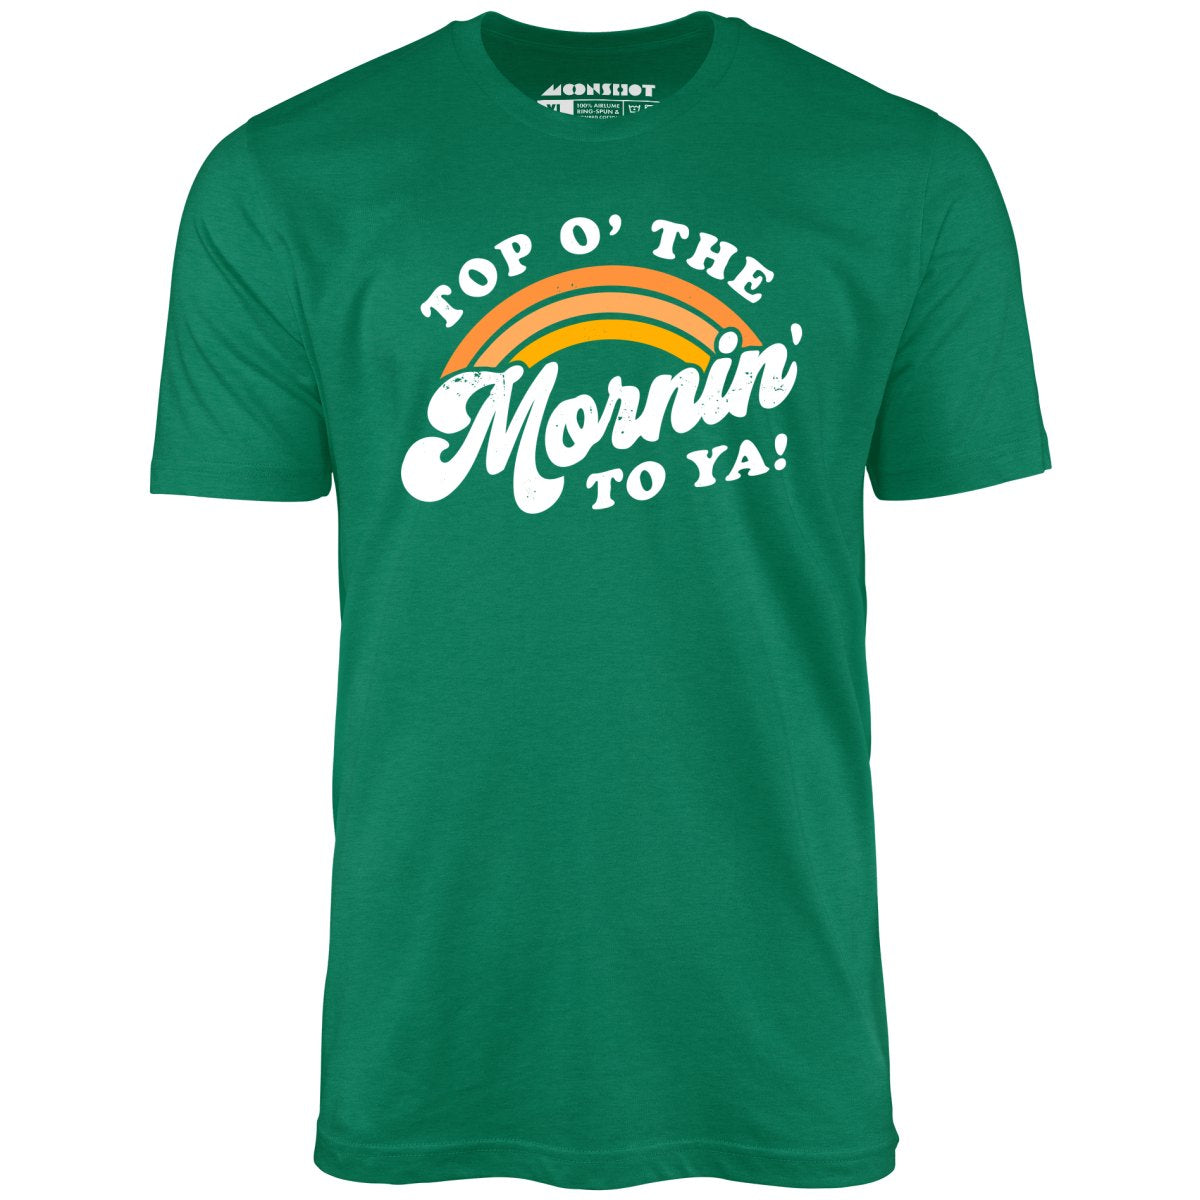 Top O' The Mornin' To Ya - Unisex T-Shirt